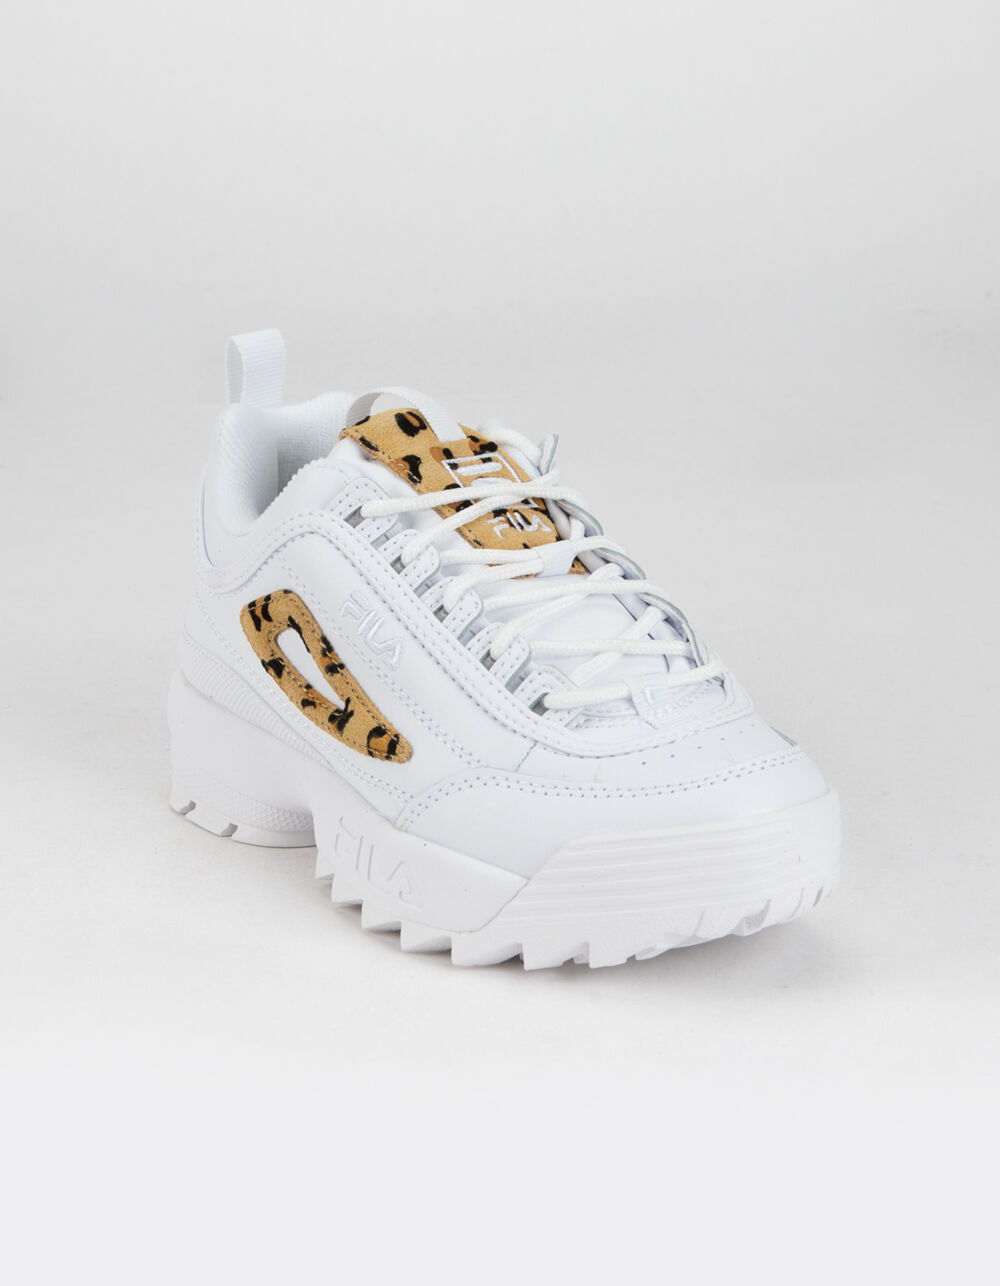 FILA Disruptor II Girls Leopard Shoes - WHITE | Tillys